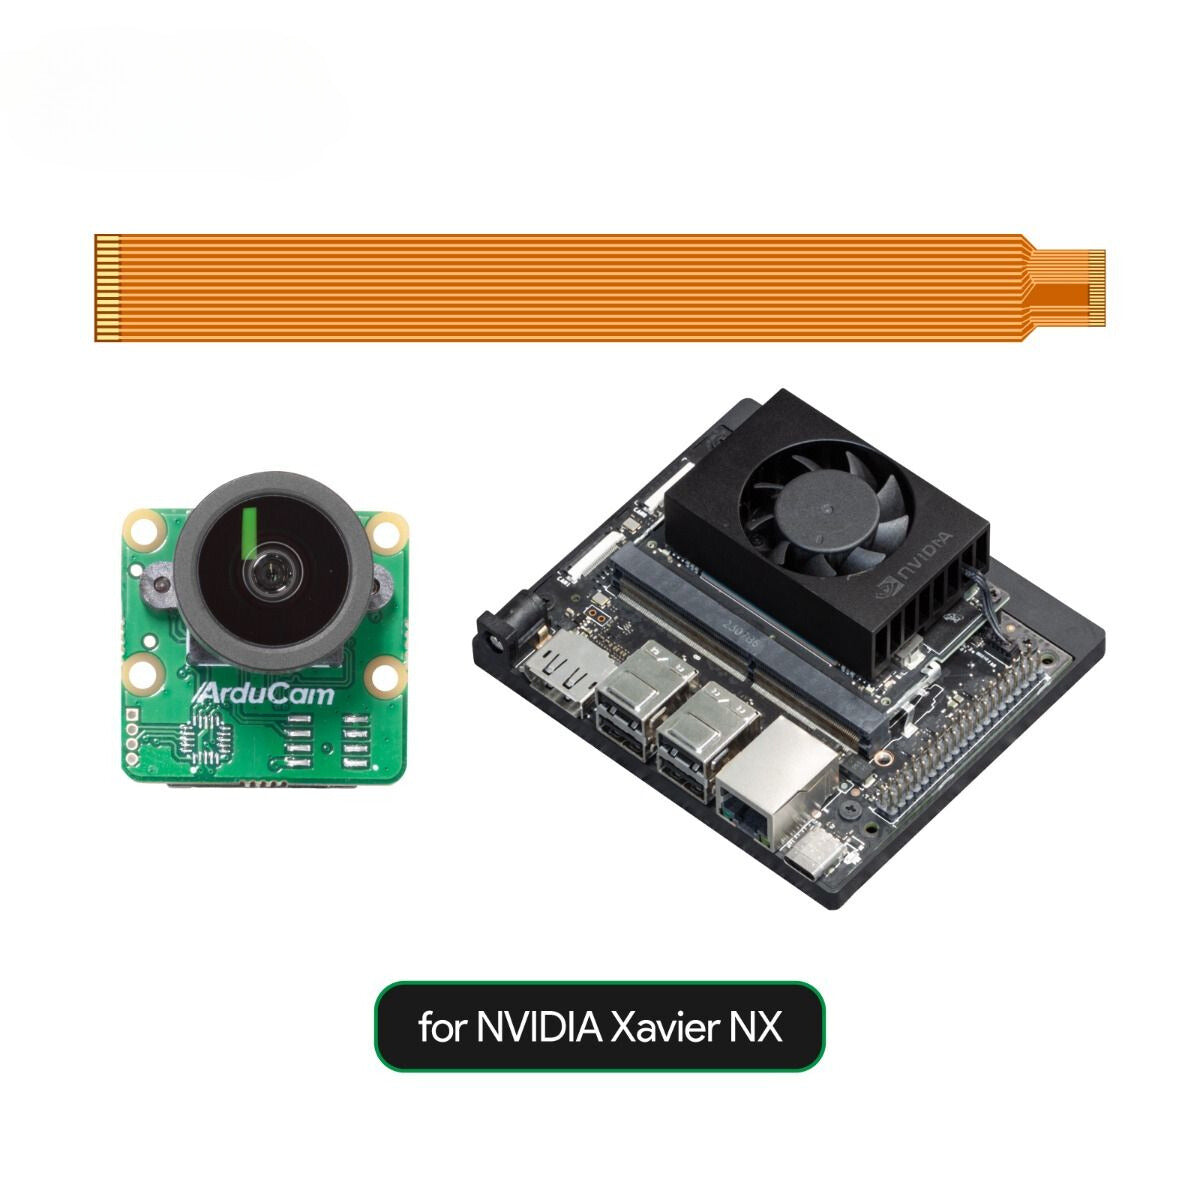 Arducam B0482 camera module with NVIDIA Xavier NX